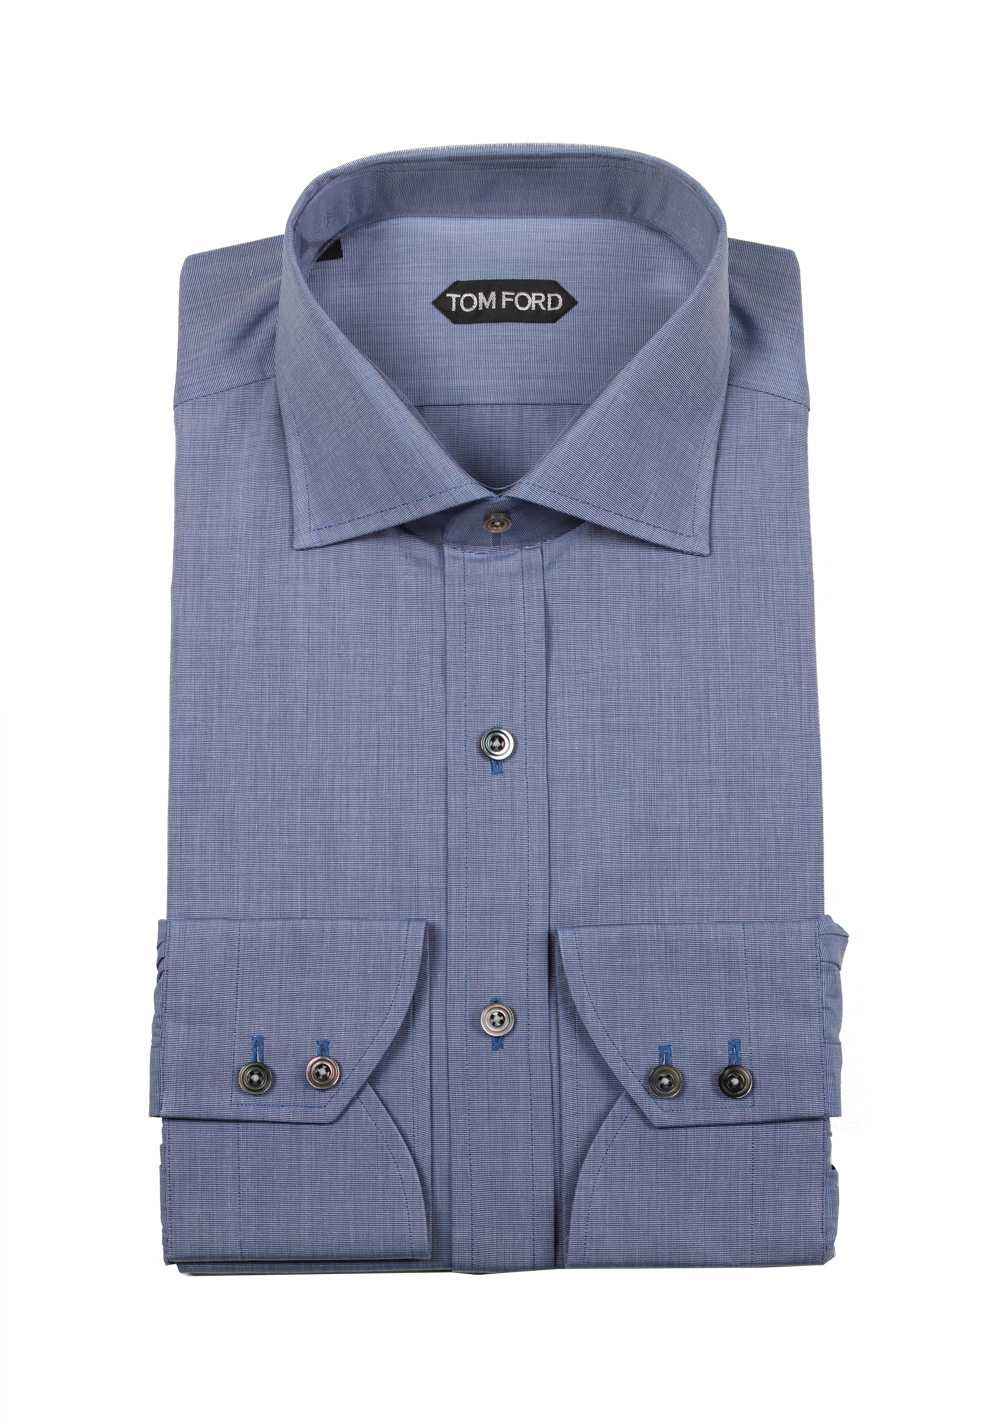 TOM FORD Patterned Blue Shirt Size 44 / 17,5 U.S. | Costume Limité